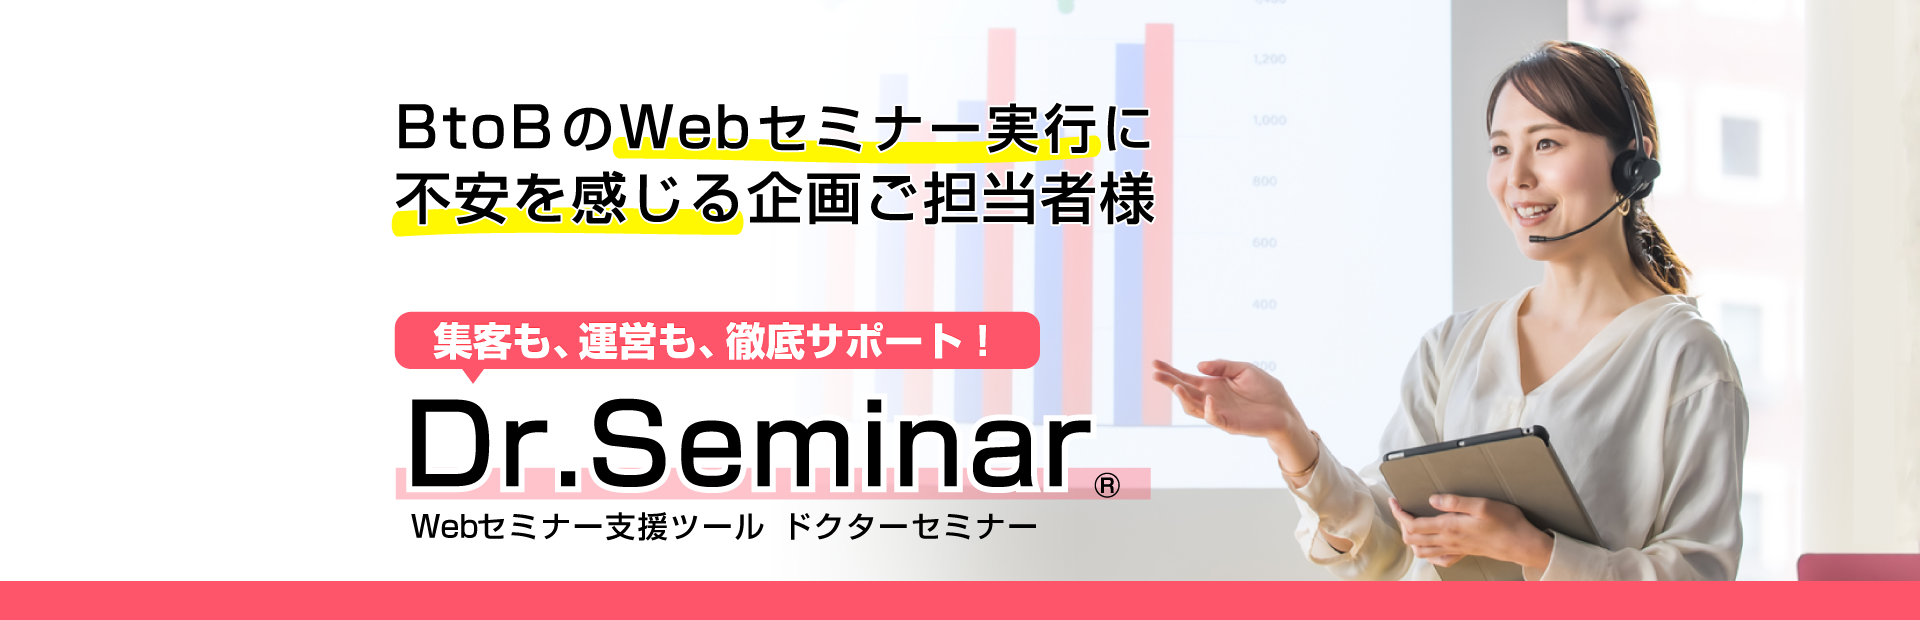 Webセミナー実行支援ツールDr.Seminar